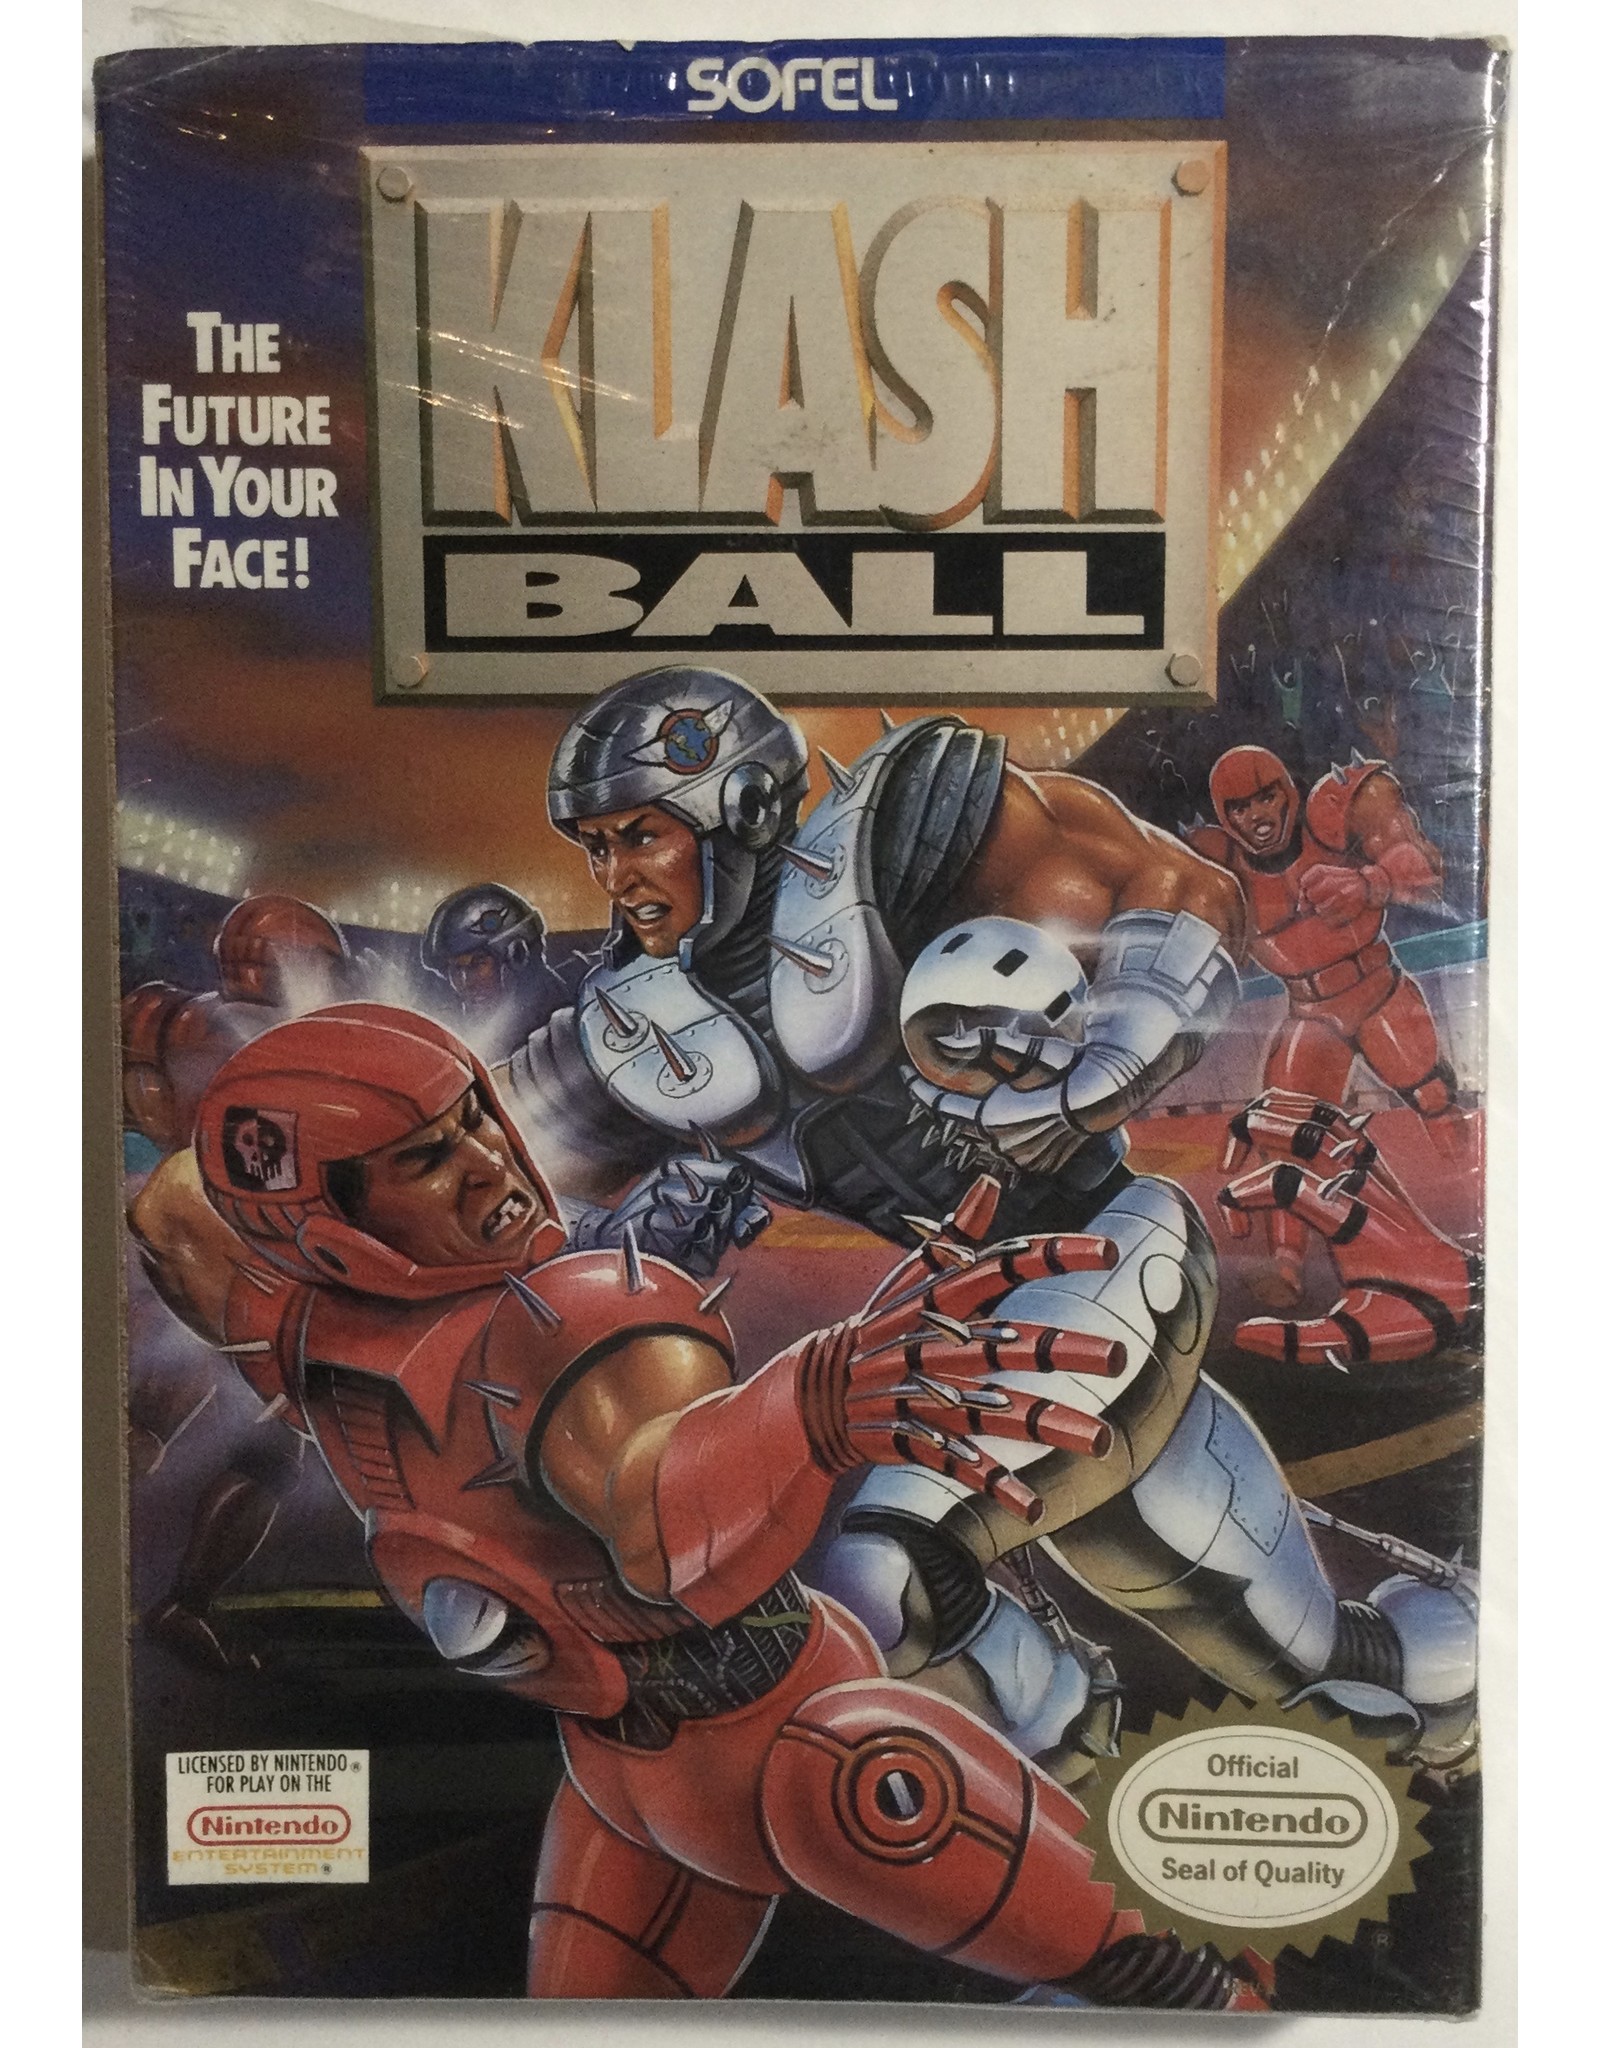 SOFEL Klash Ball for Nintendo Entertainment system (NES)